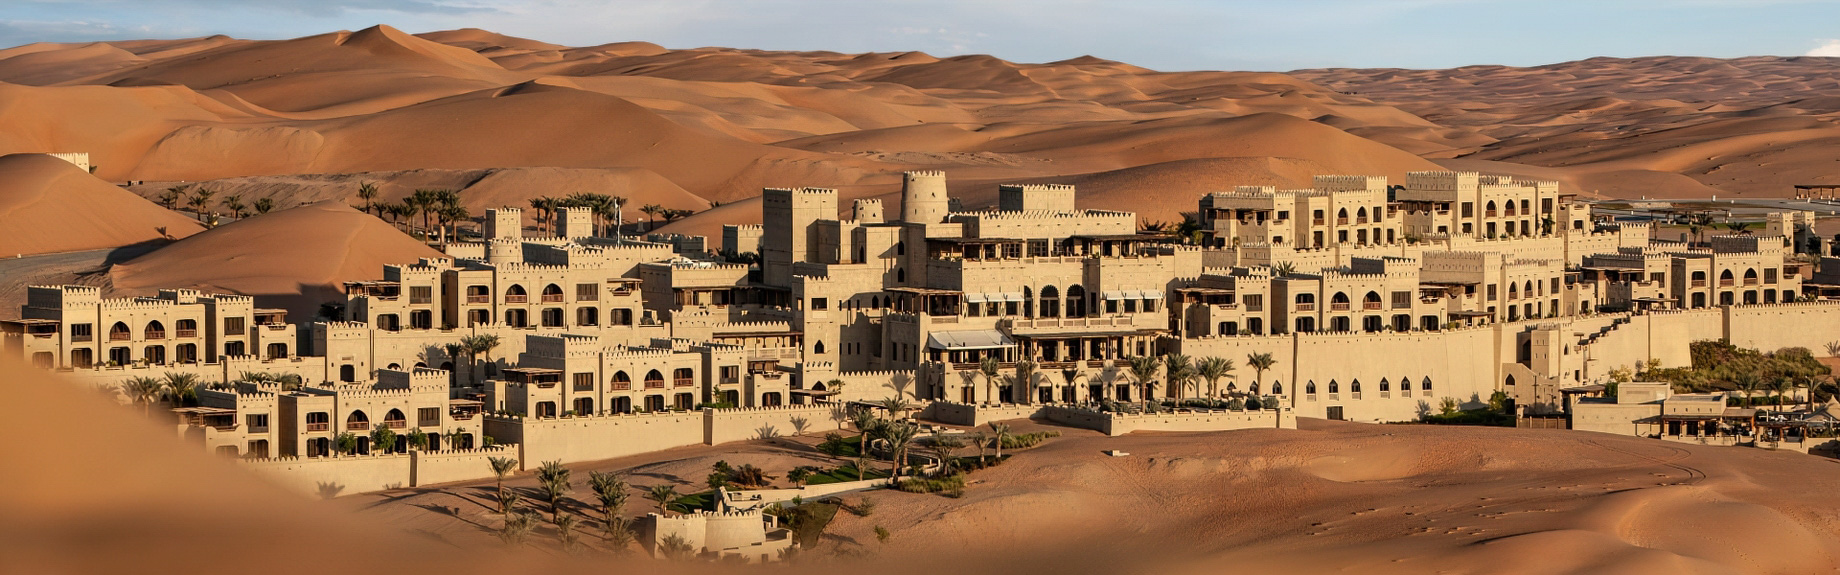 Qasr Al Sarab Desert Resort by Anantara - Abu Dhabi - United Arab Emirates - Resort View